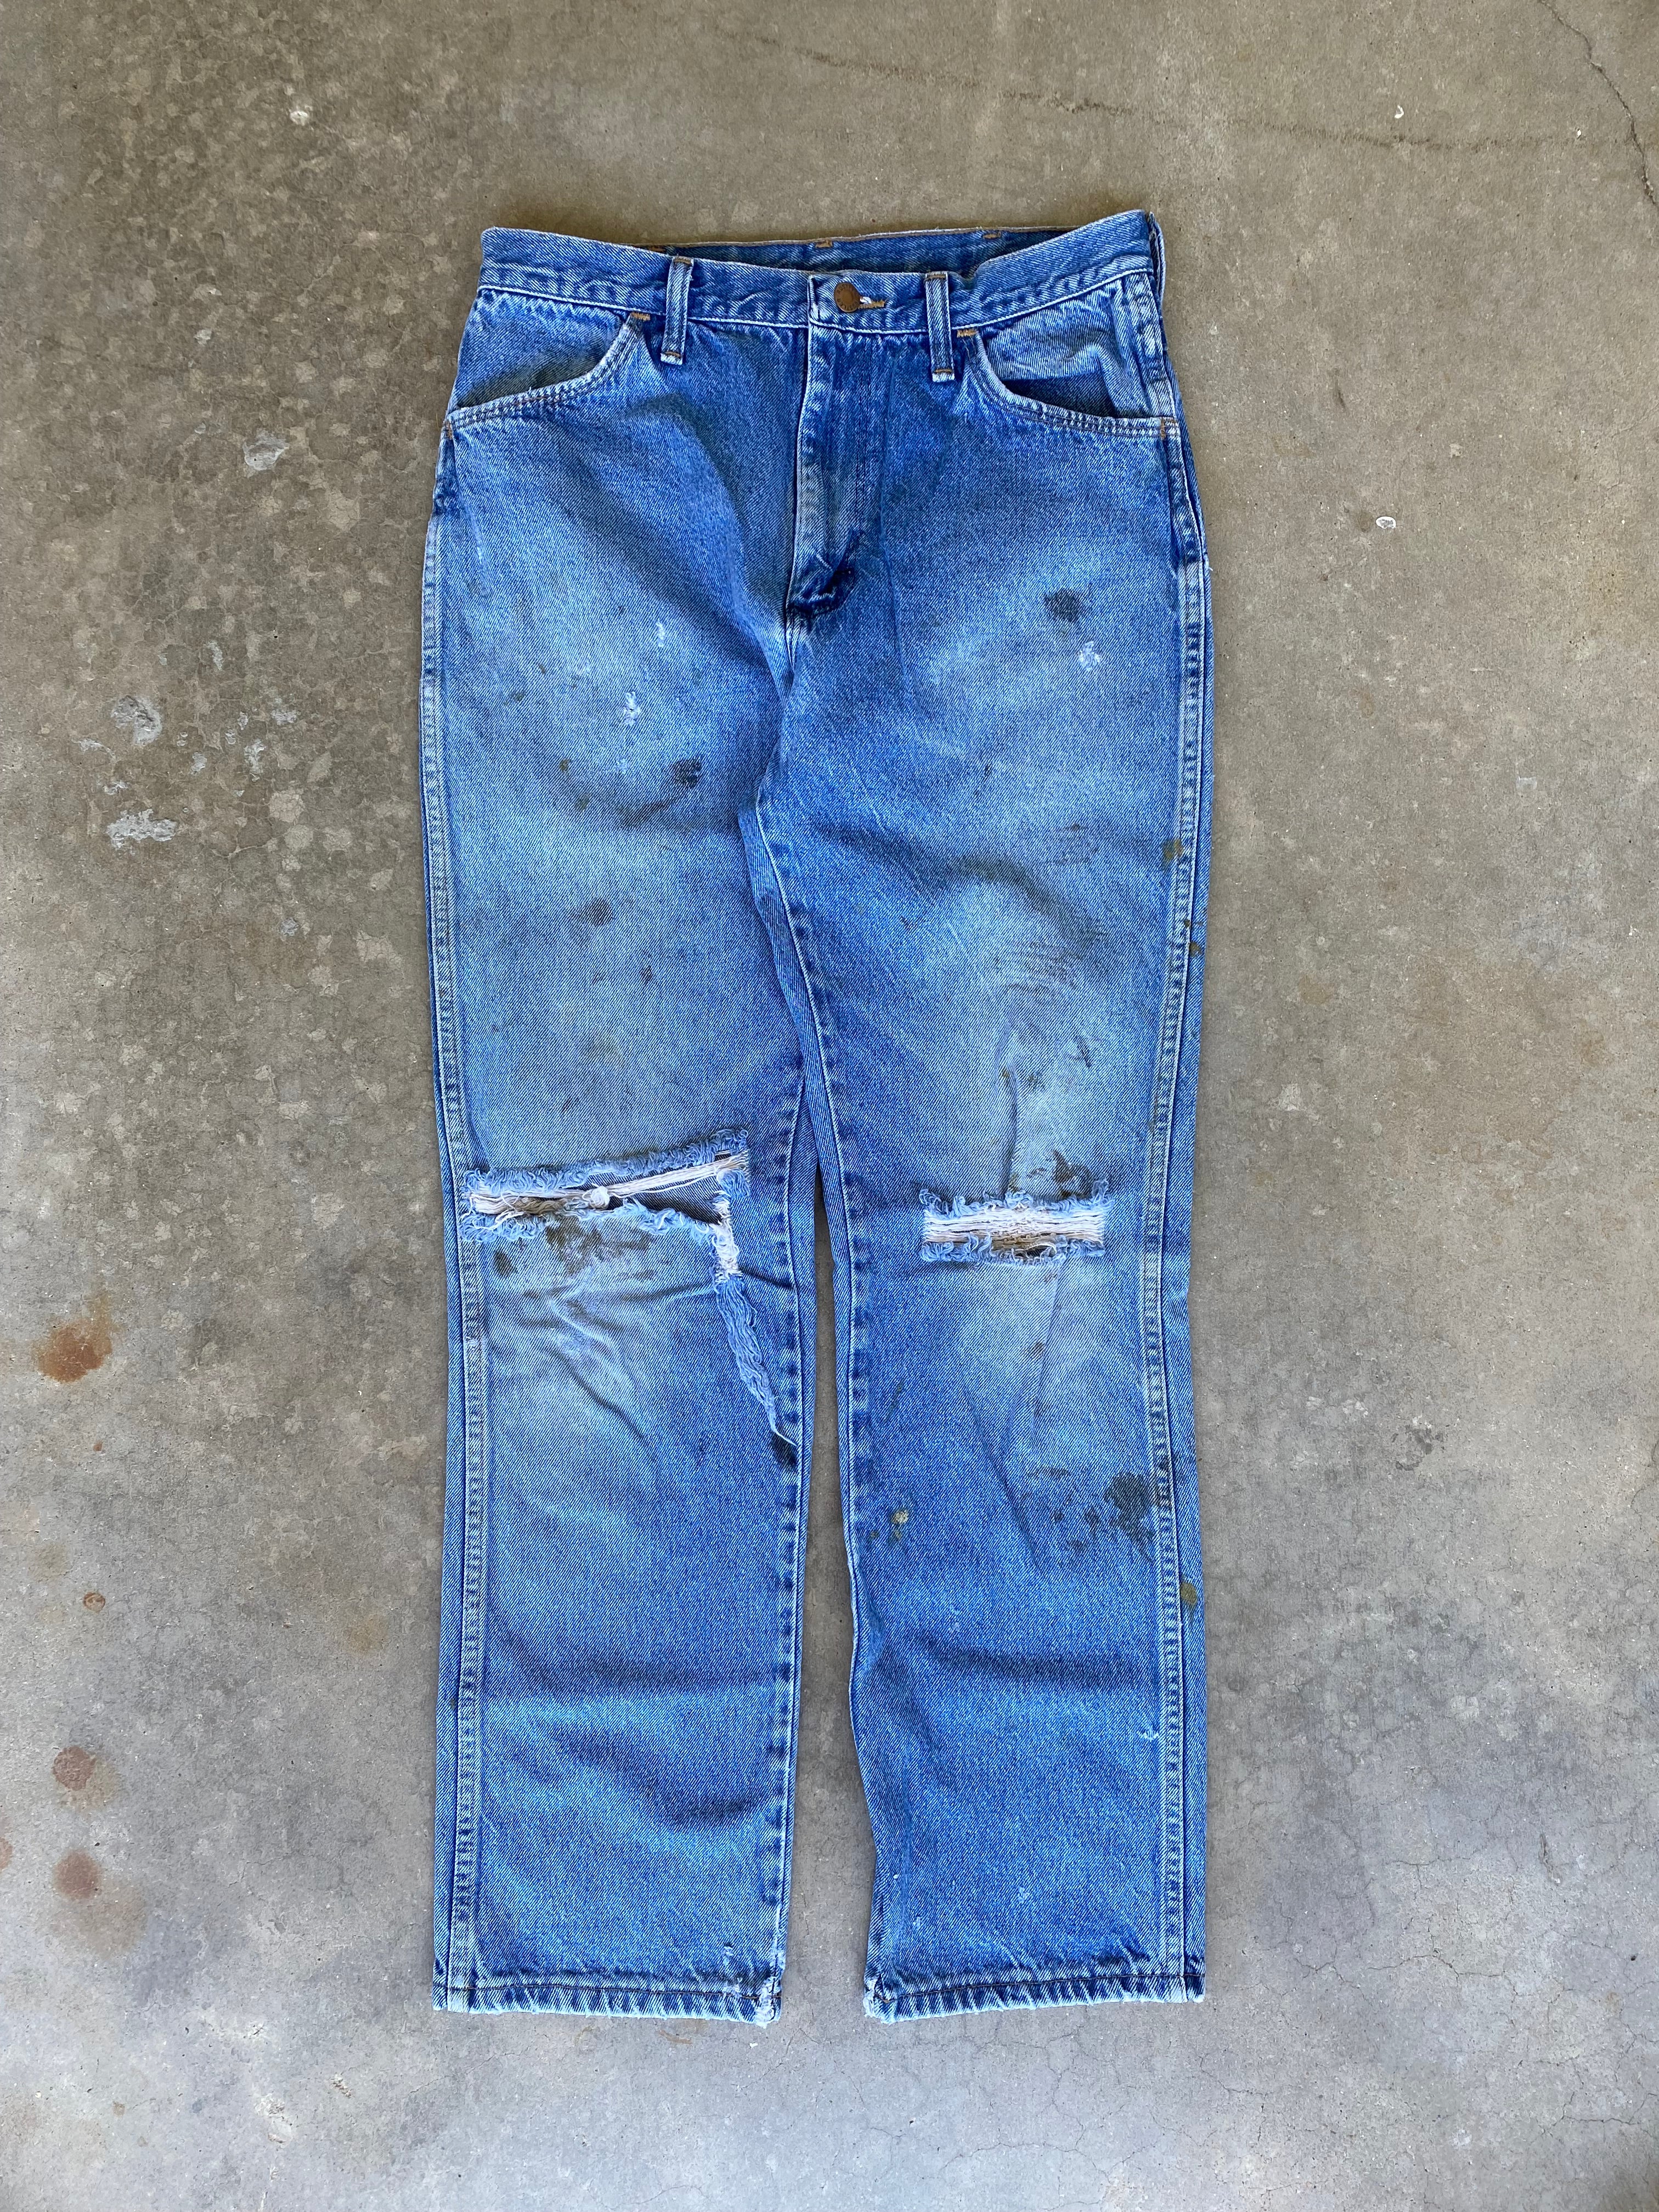 Vintage Rustler Distressed/Worn Jeans (31"x30.5)